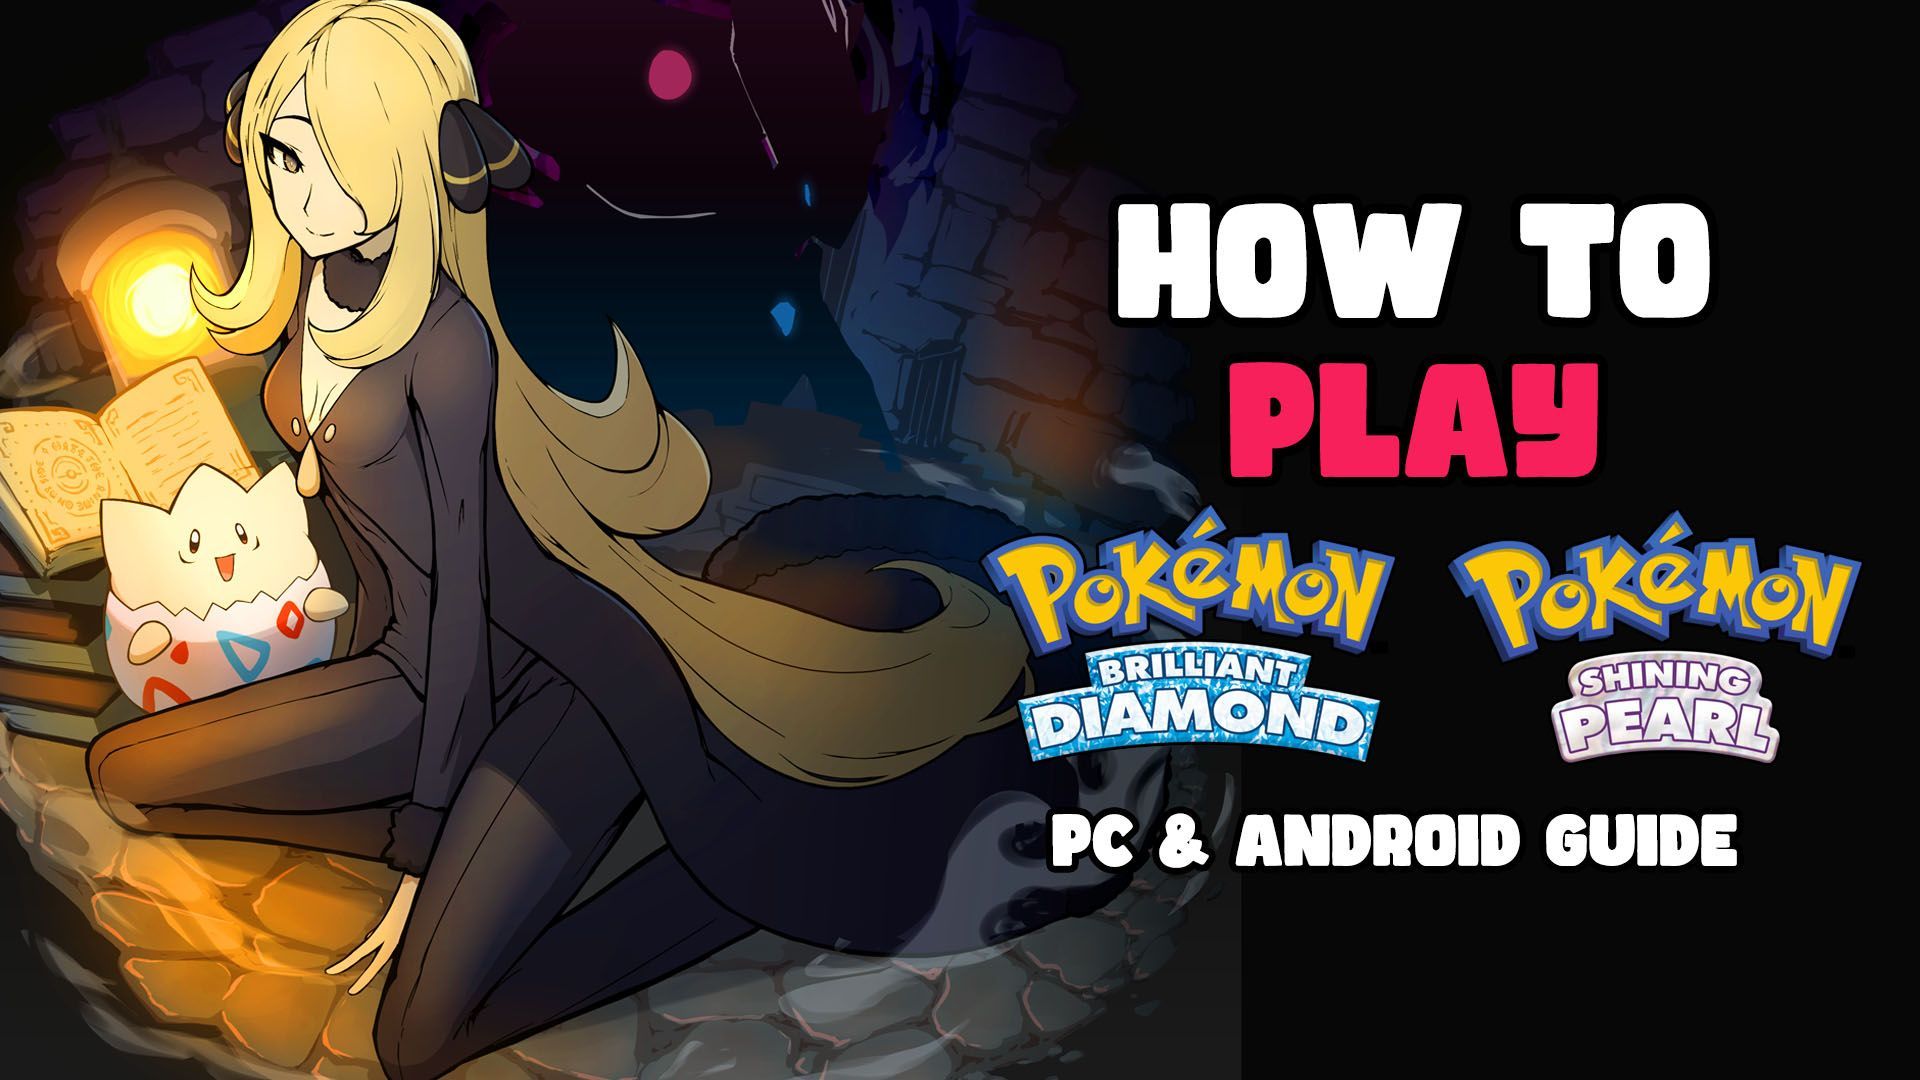 Pokémon Brilliant Diamond & Shining Pearl PC Download � Yuzu